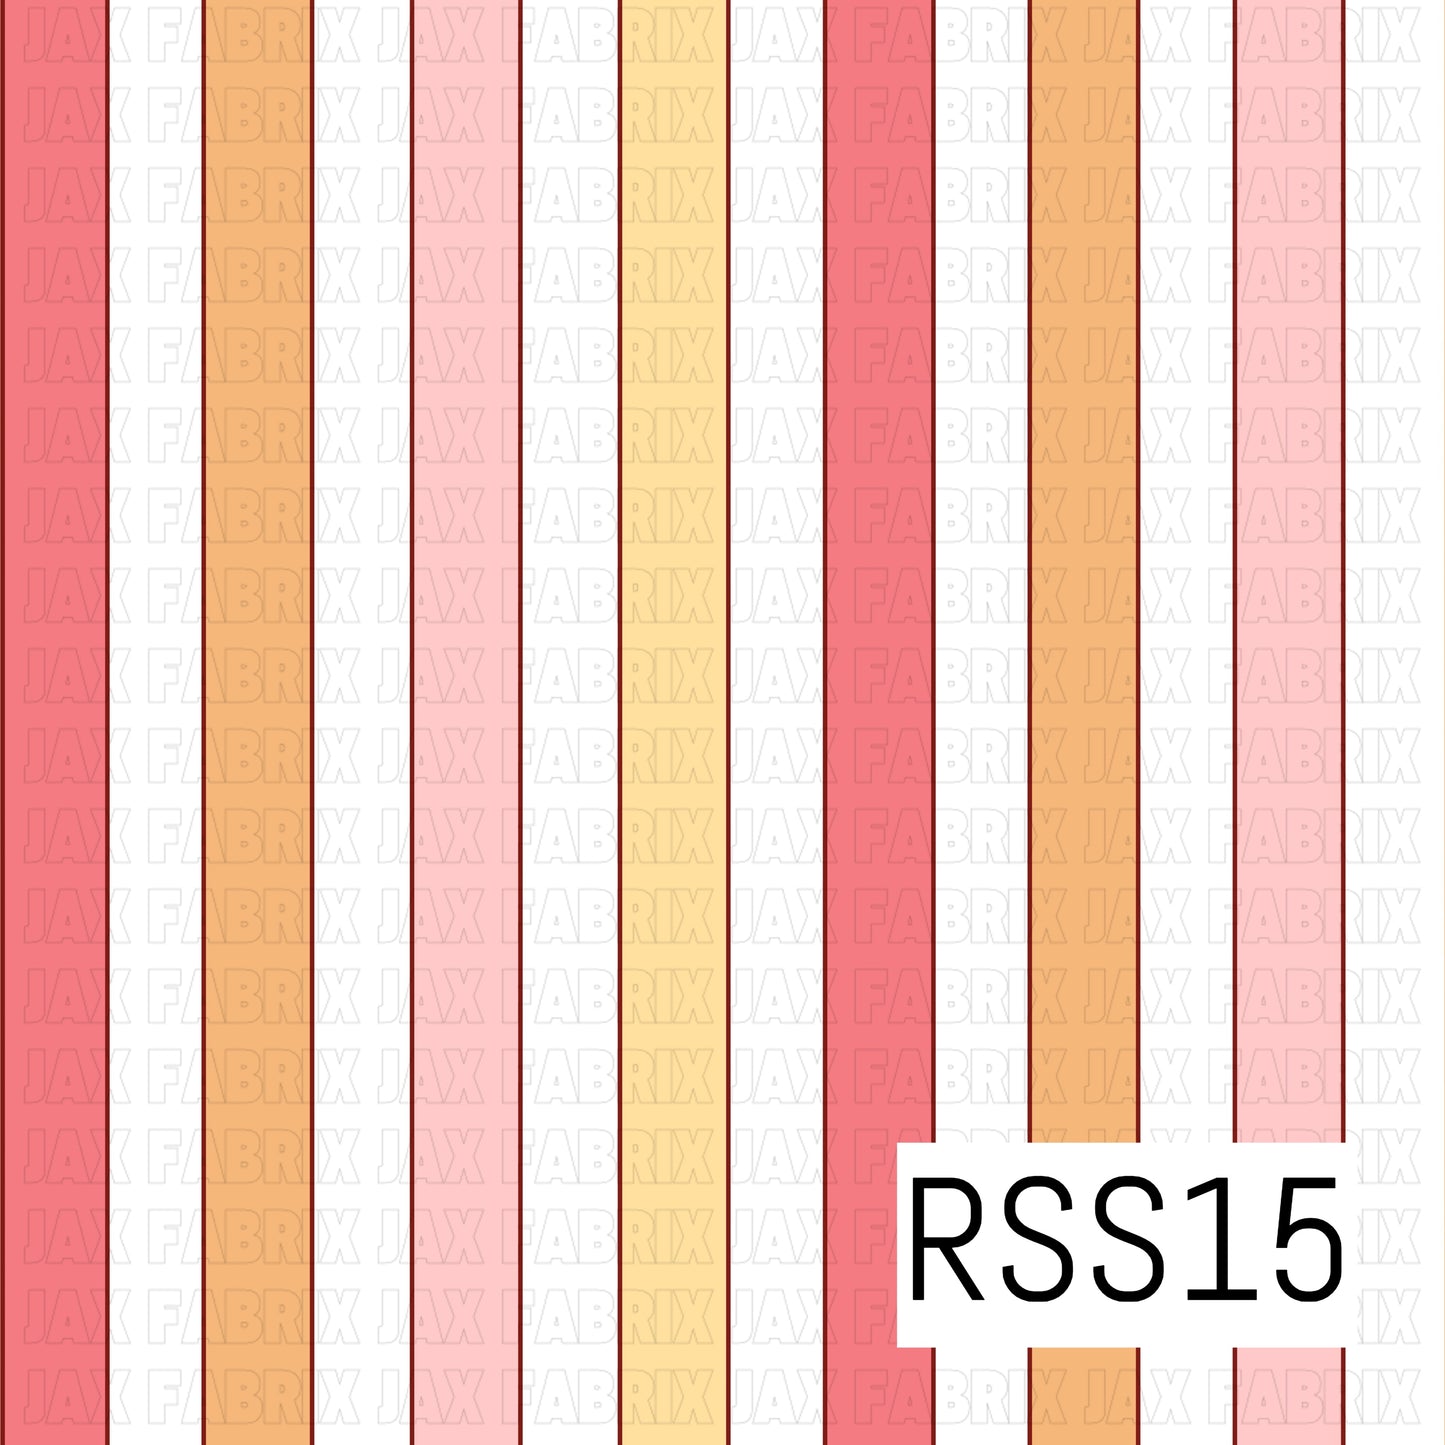 RSS15